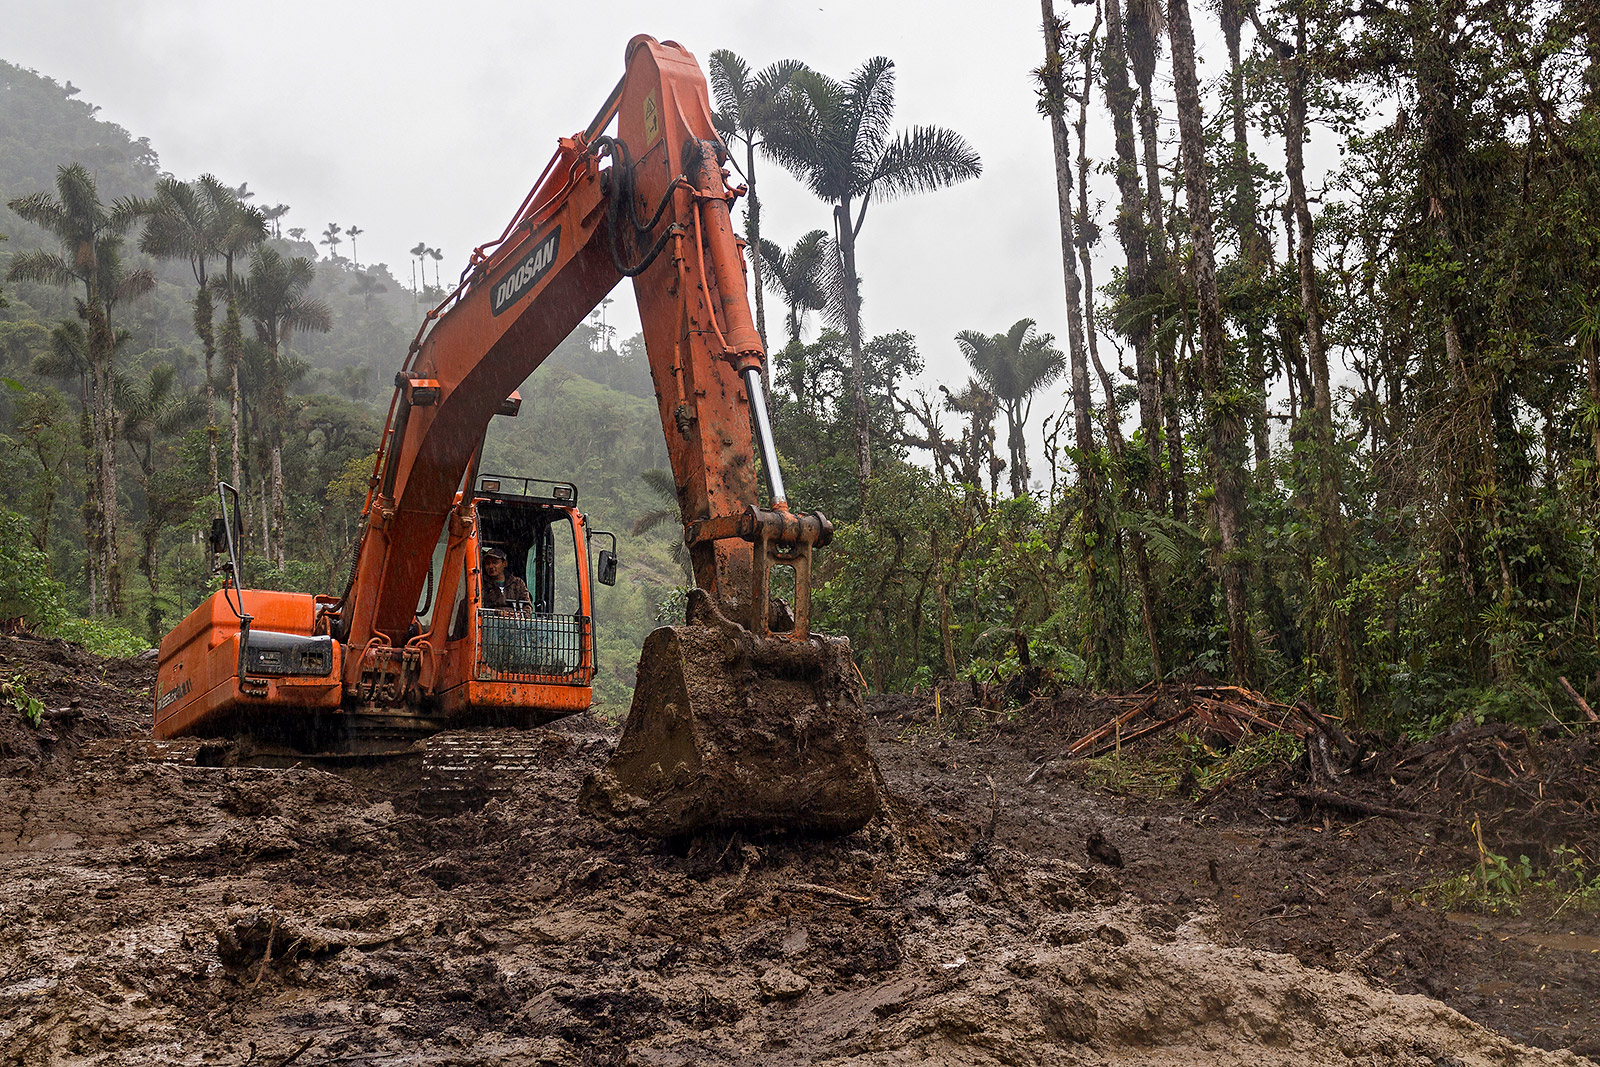 Image showing a Backhoe loader destroying rainforest in the upper Amazon of Ecuador